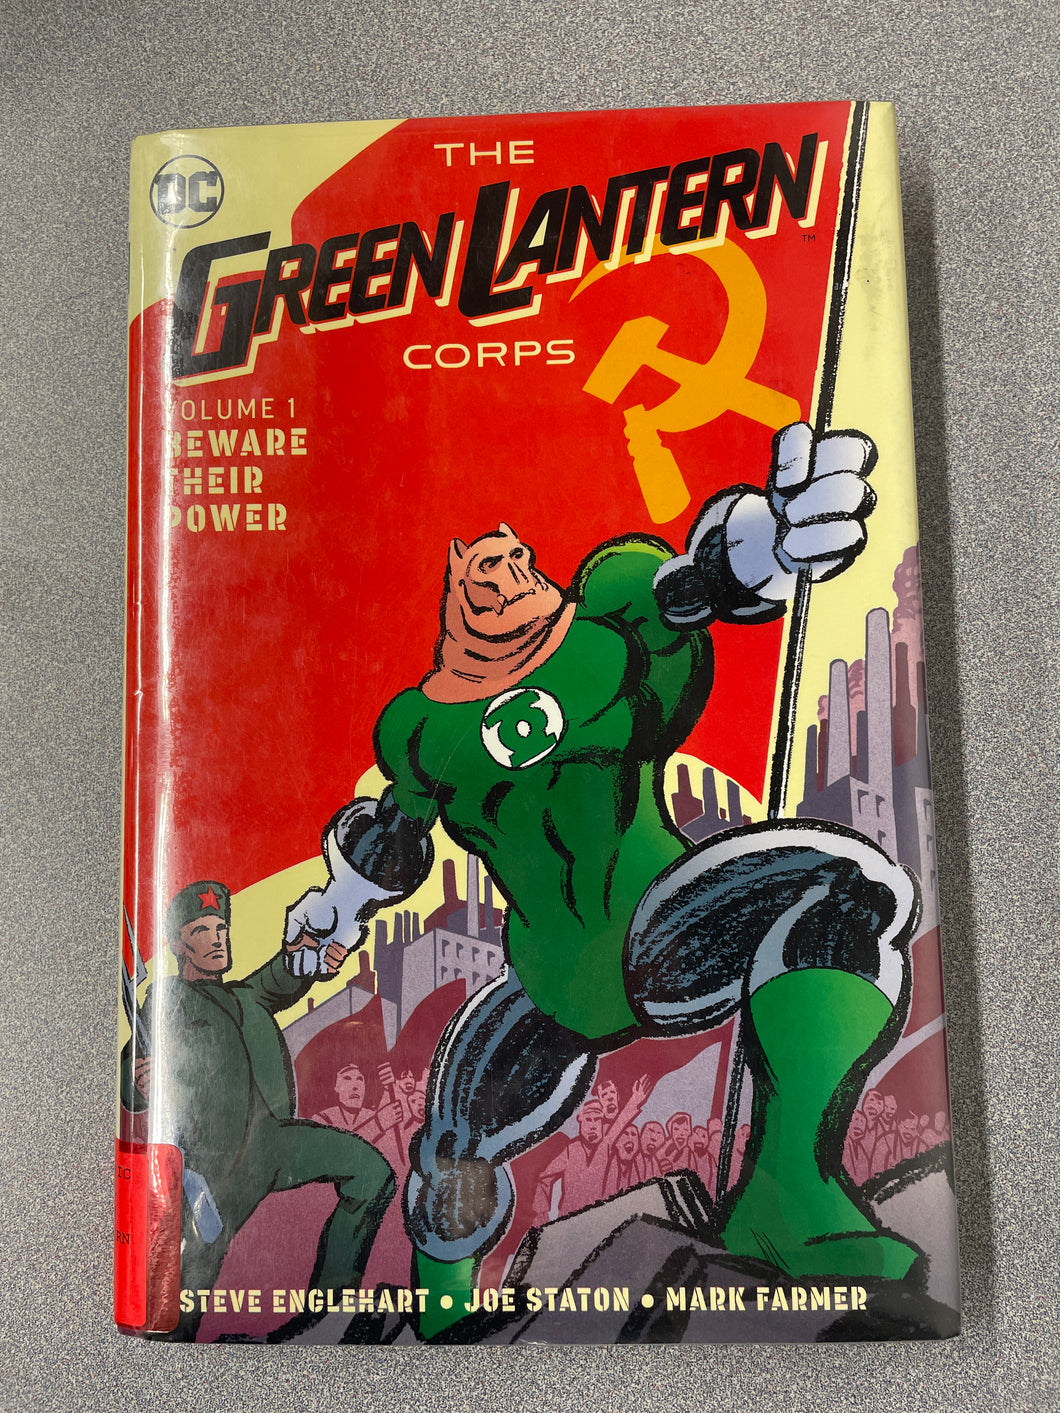 The Green Lantern Corps, Volume 1: Beware Their Power, Englehart, Steve,et al. [2018] GN 2/24